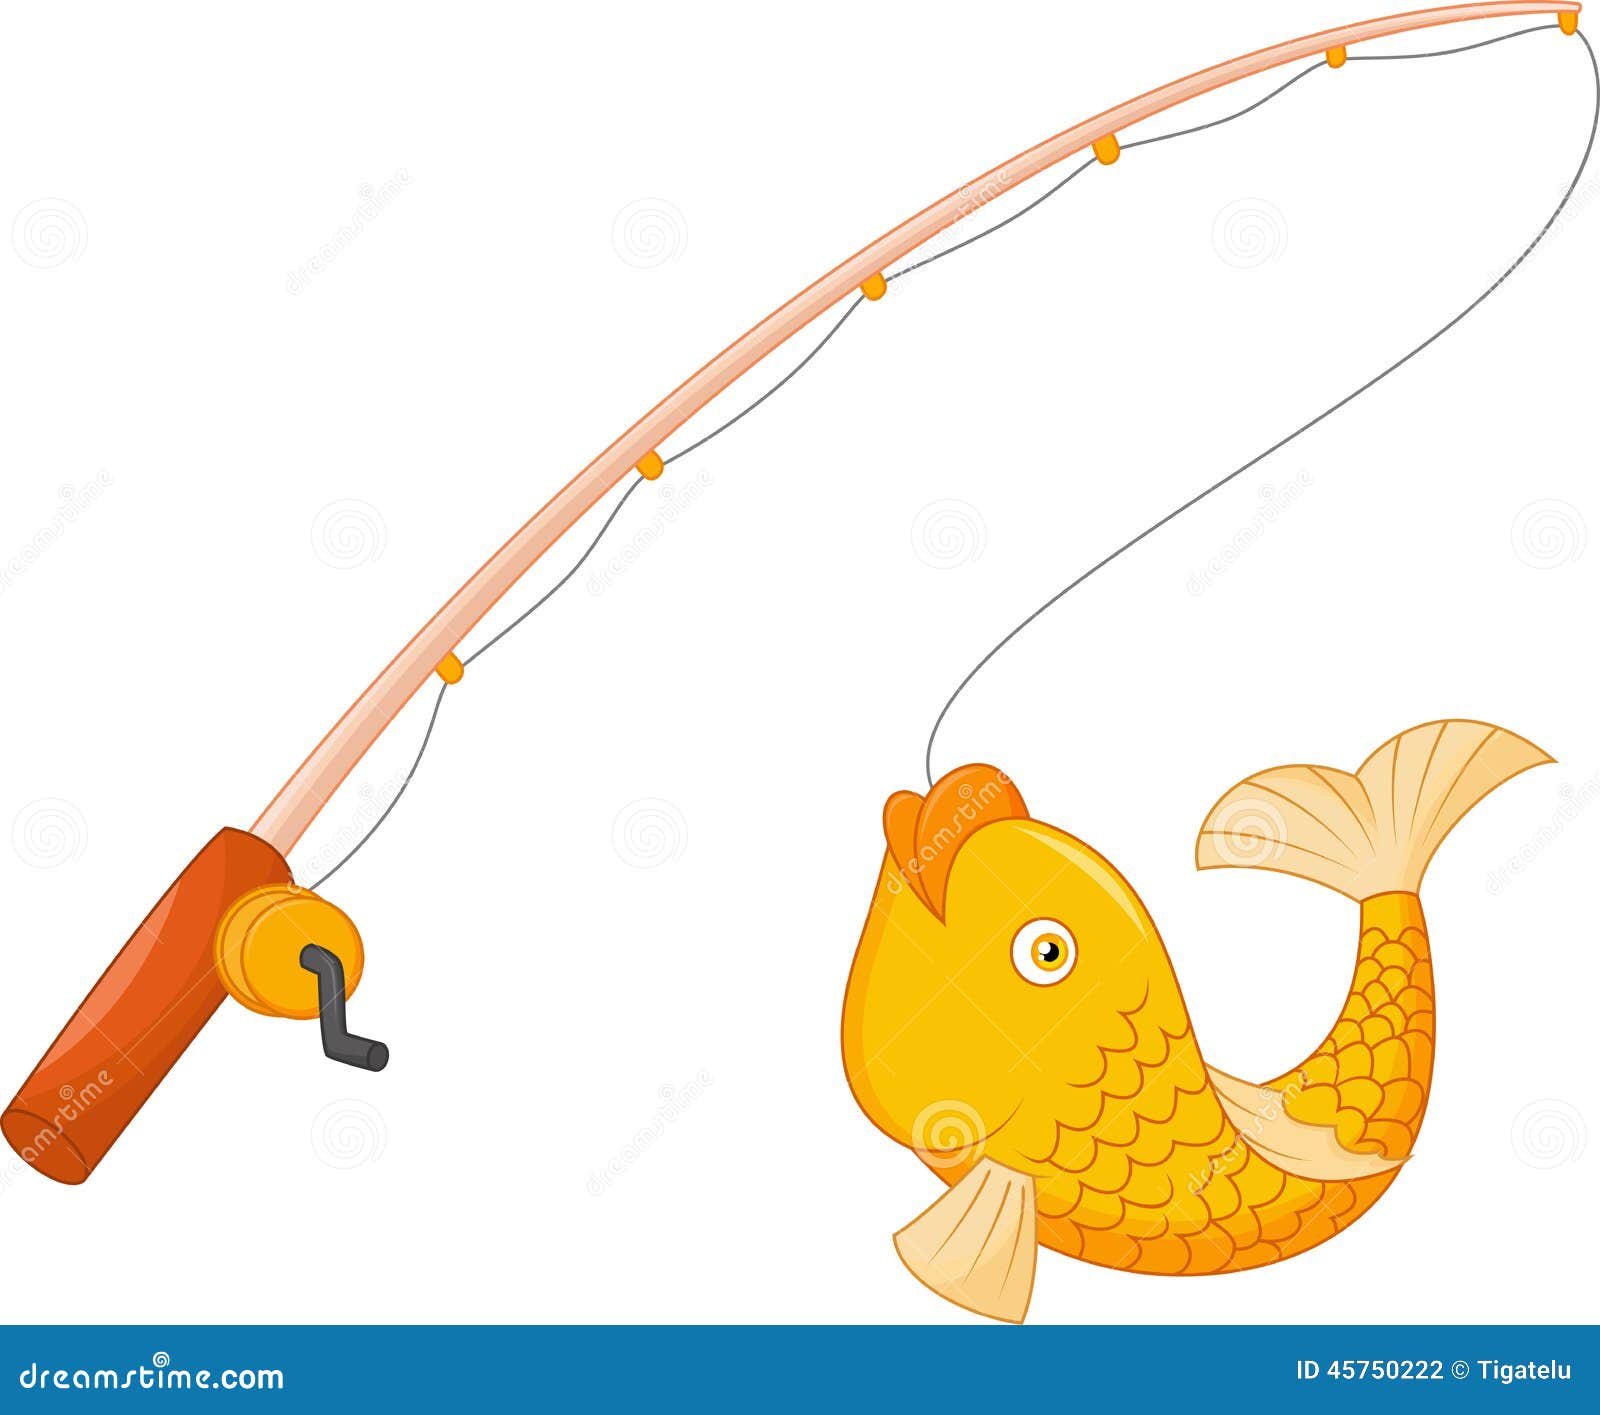 https://thumbs.dreamstime.com/z/fishing-pole-hook-fish-illustration-45750222.jpg